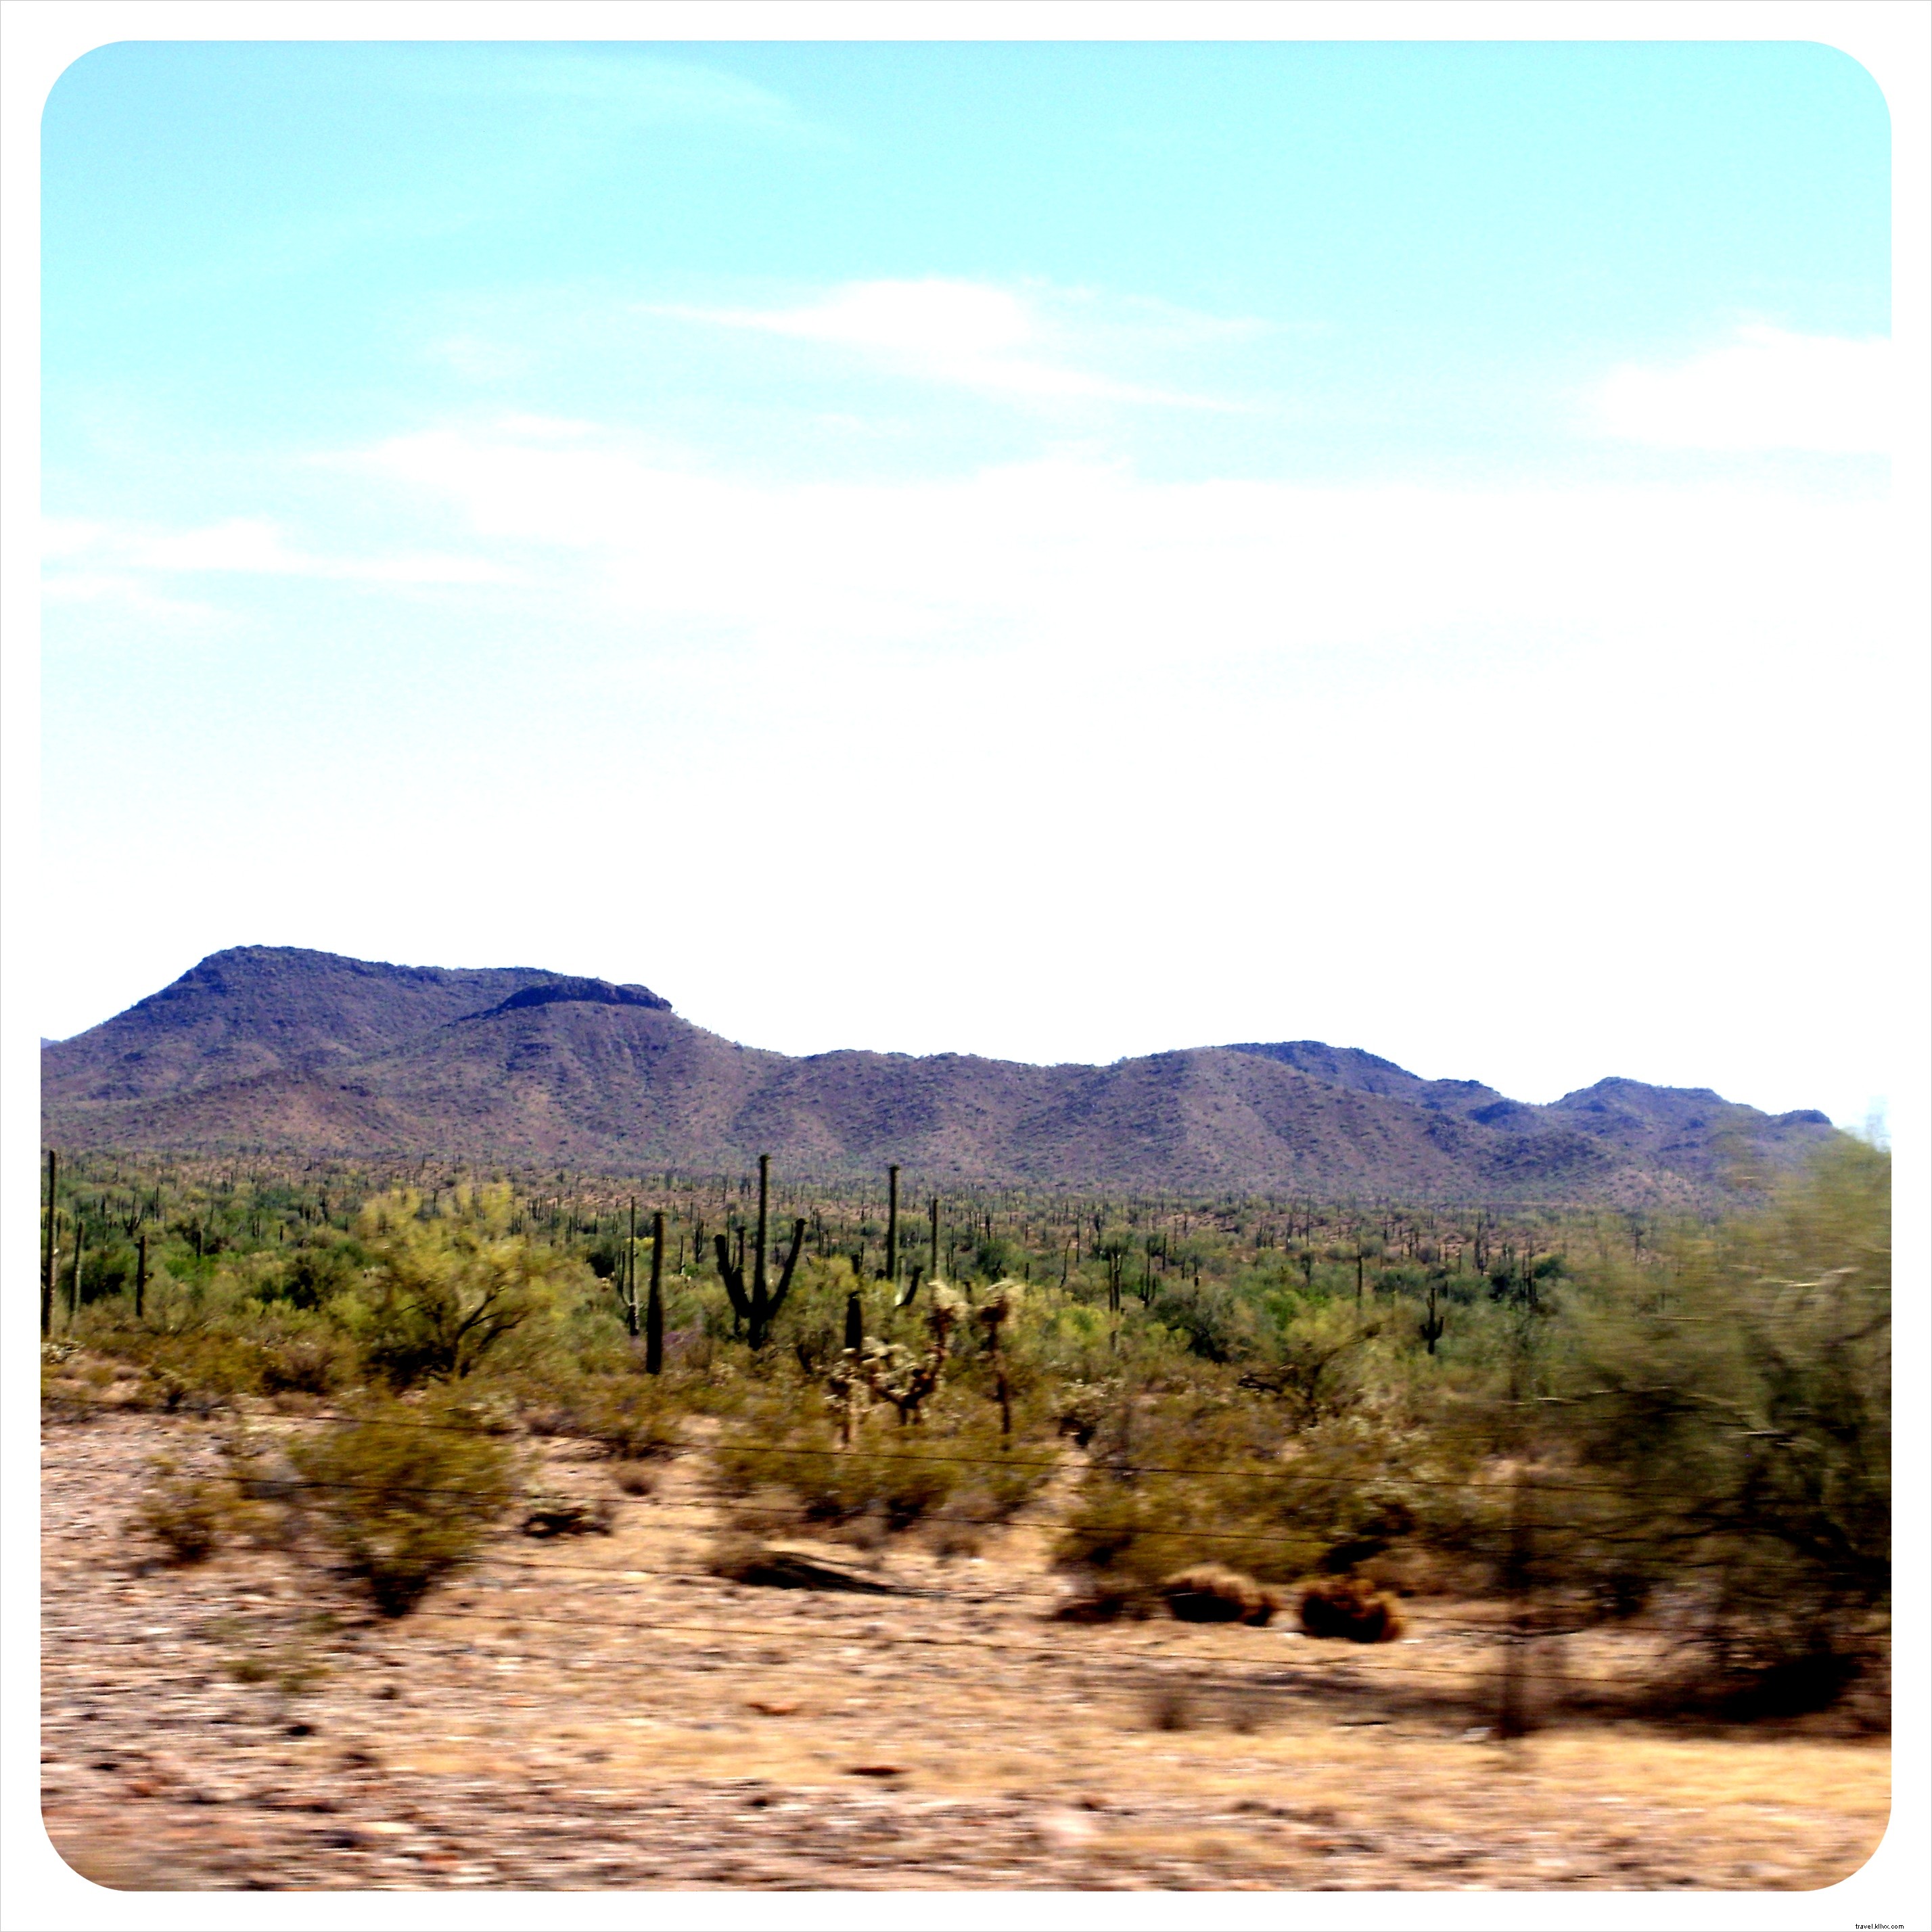 Ao longo da fronteira - San Diego a Tucson